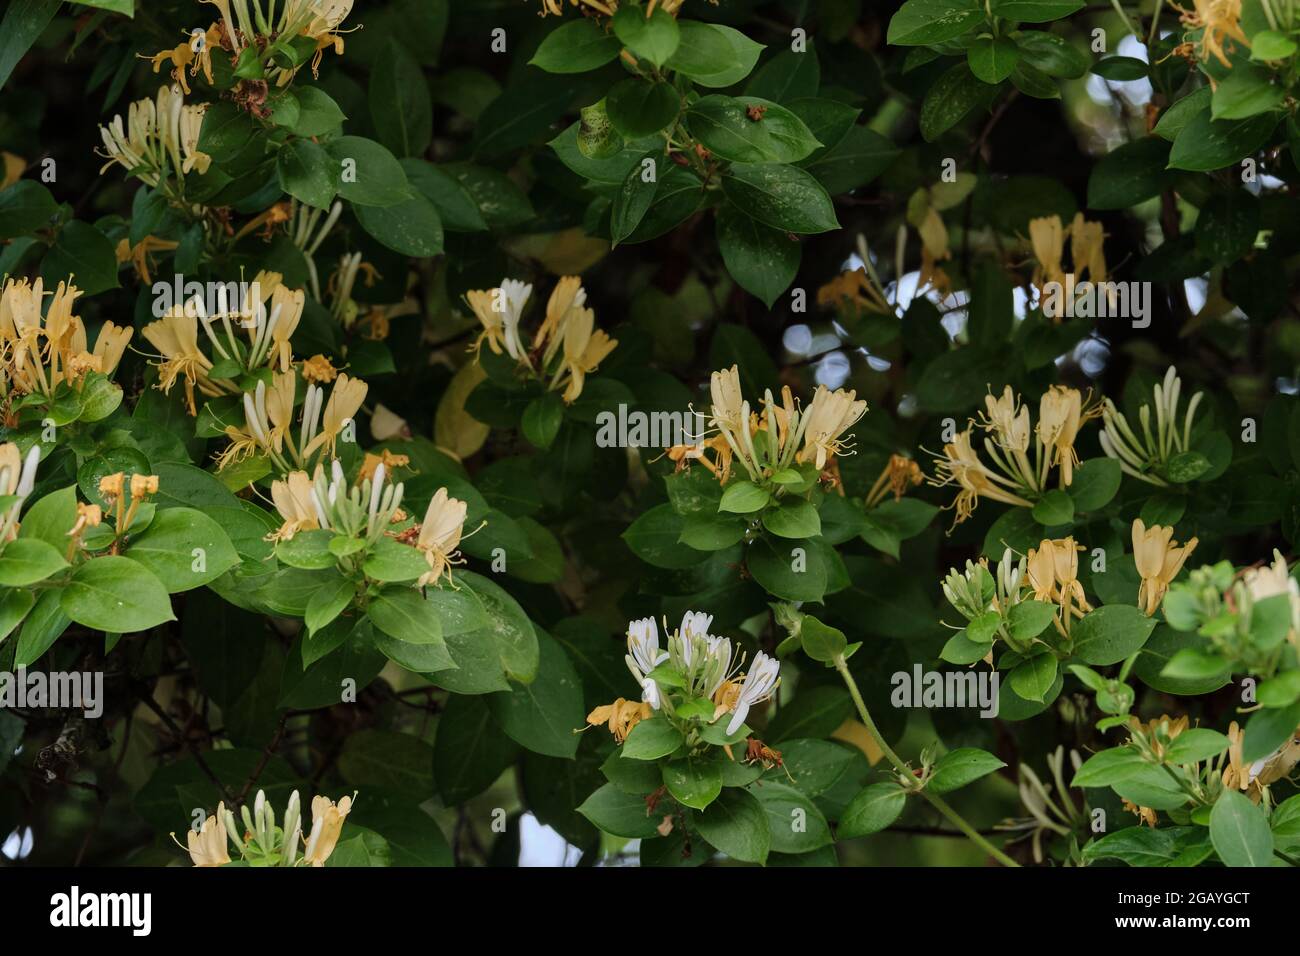 Lonicera periclymenum or common honeysuckle plants blooming flowers in spring Stock Photo